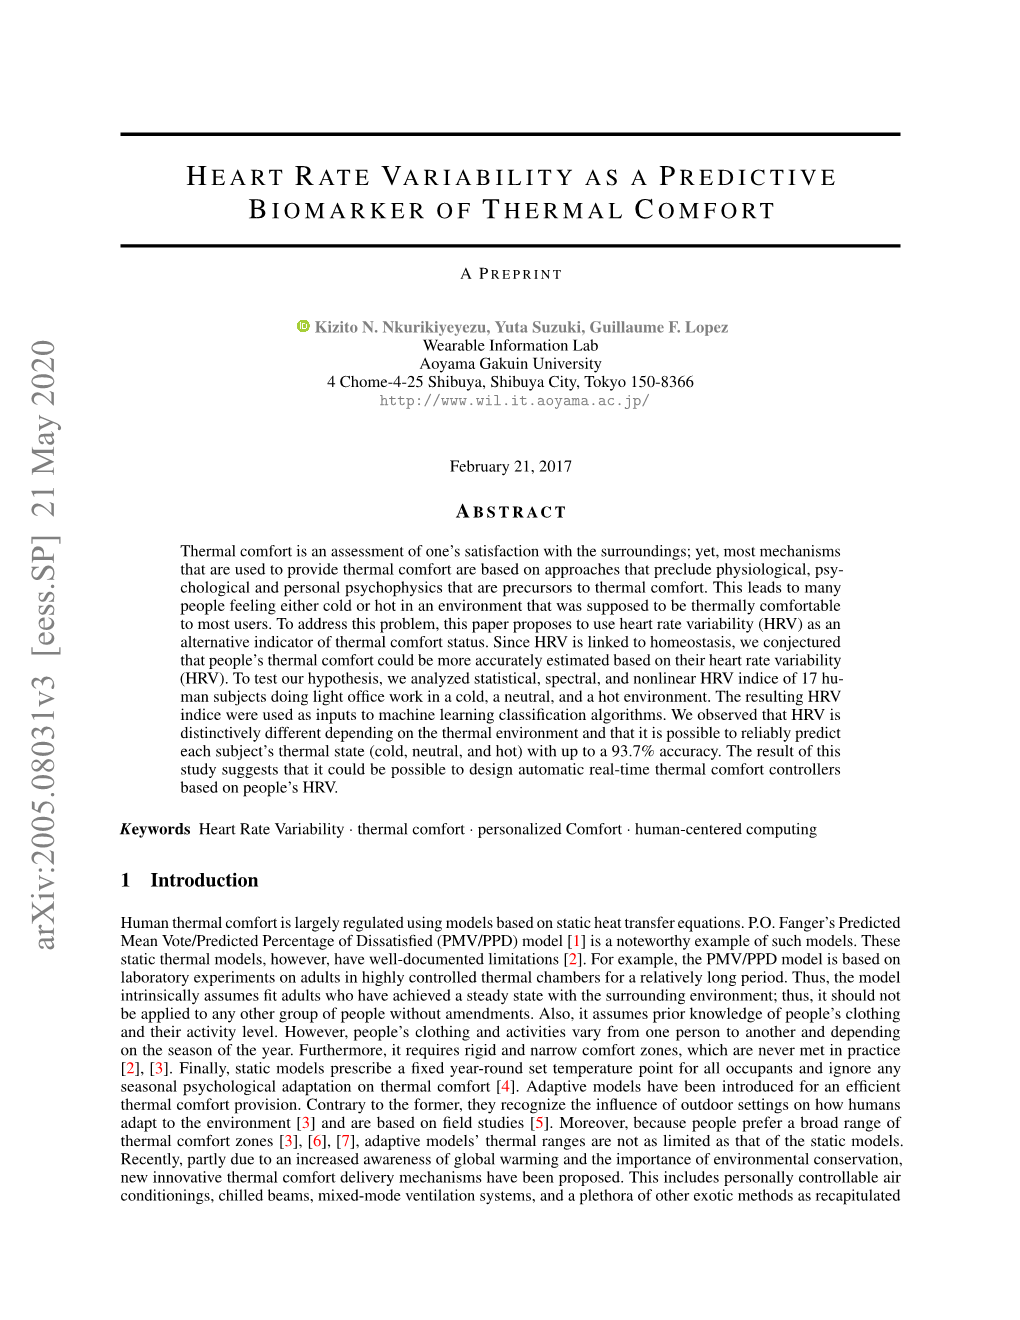 Heart Rate Variability As a Predictive Biomarker of Thermal Comfort AP REPRINT